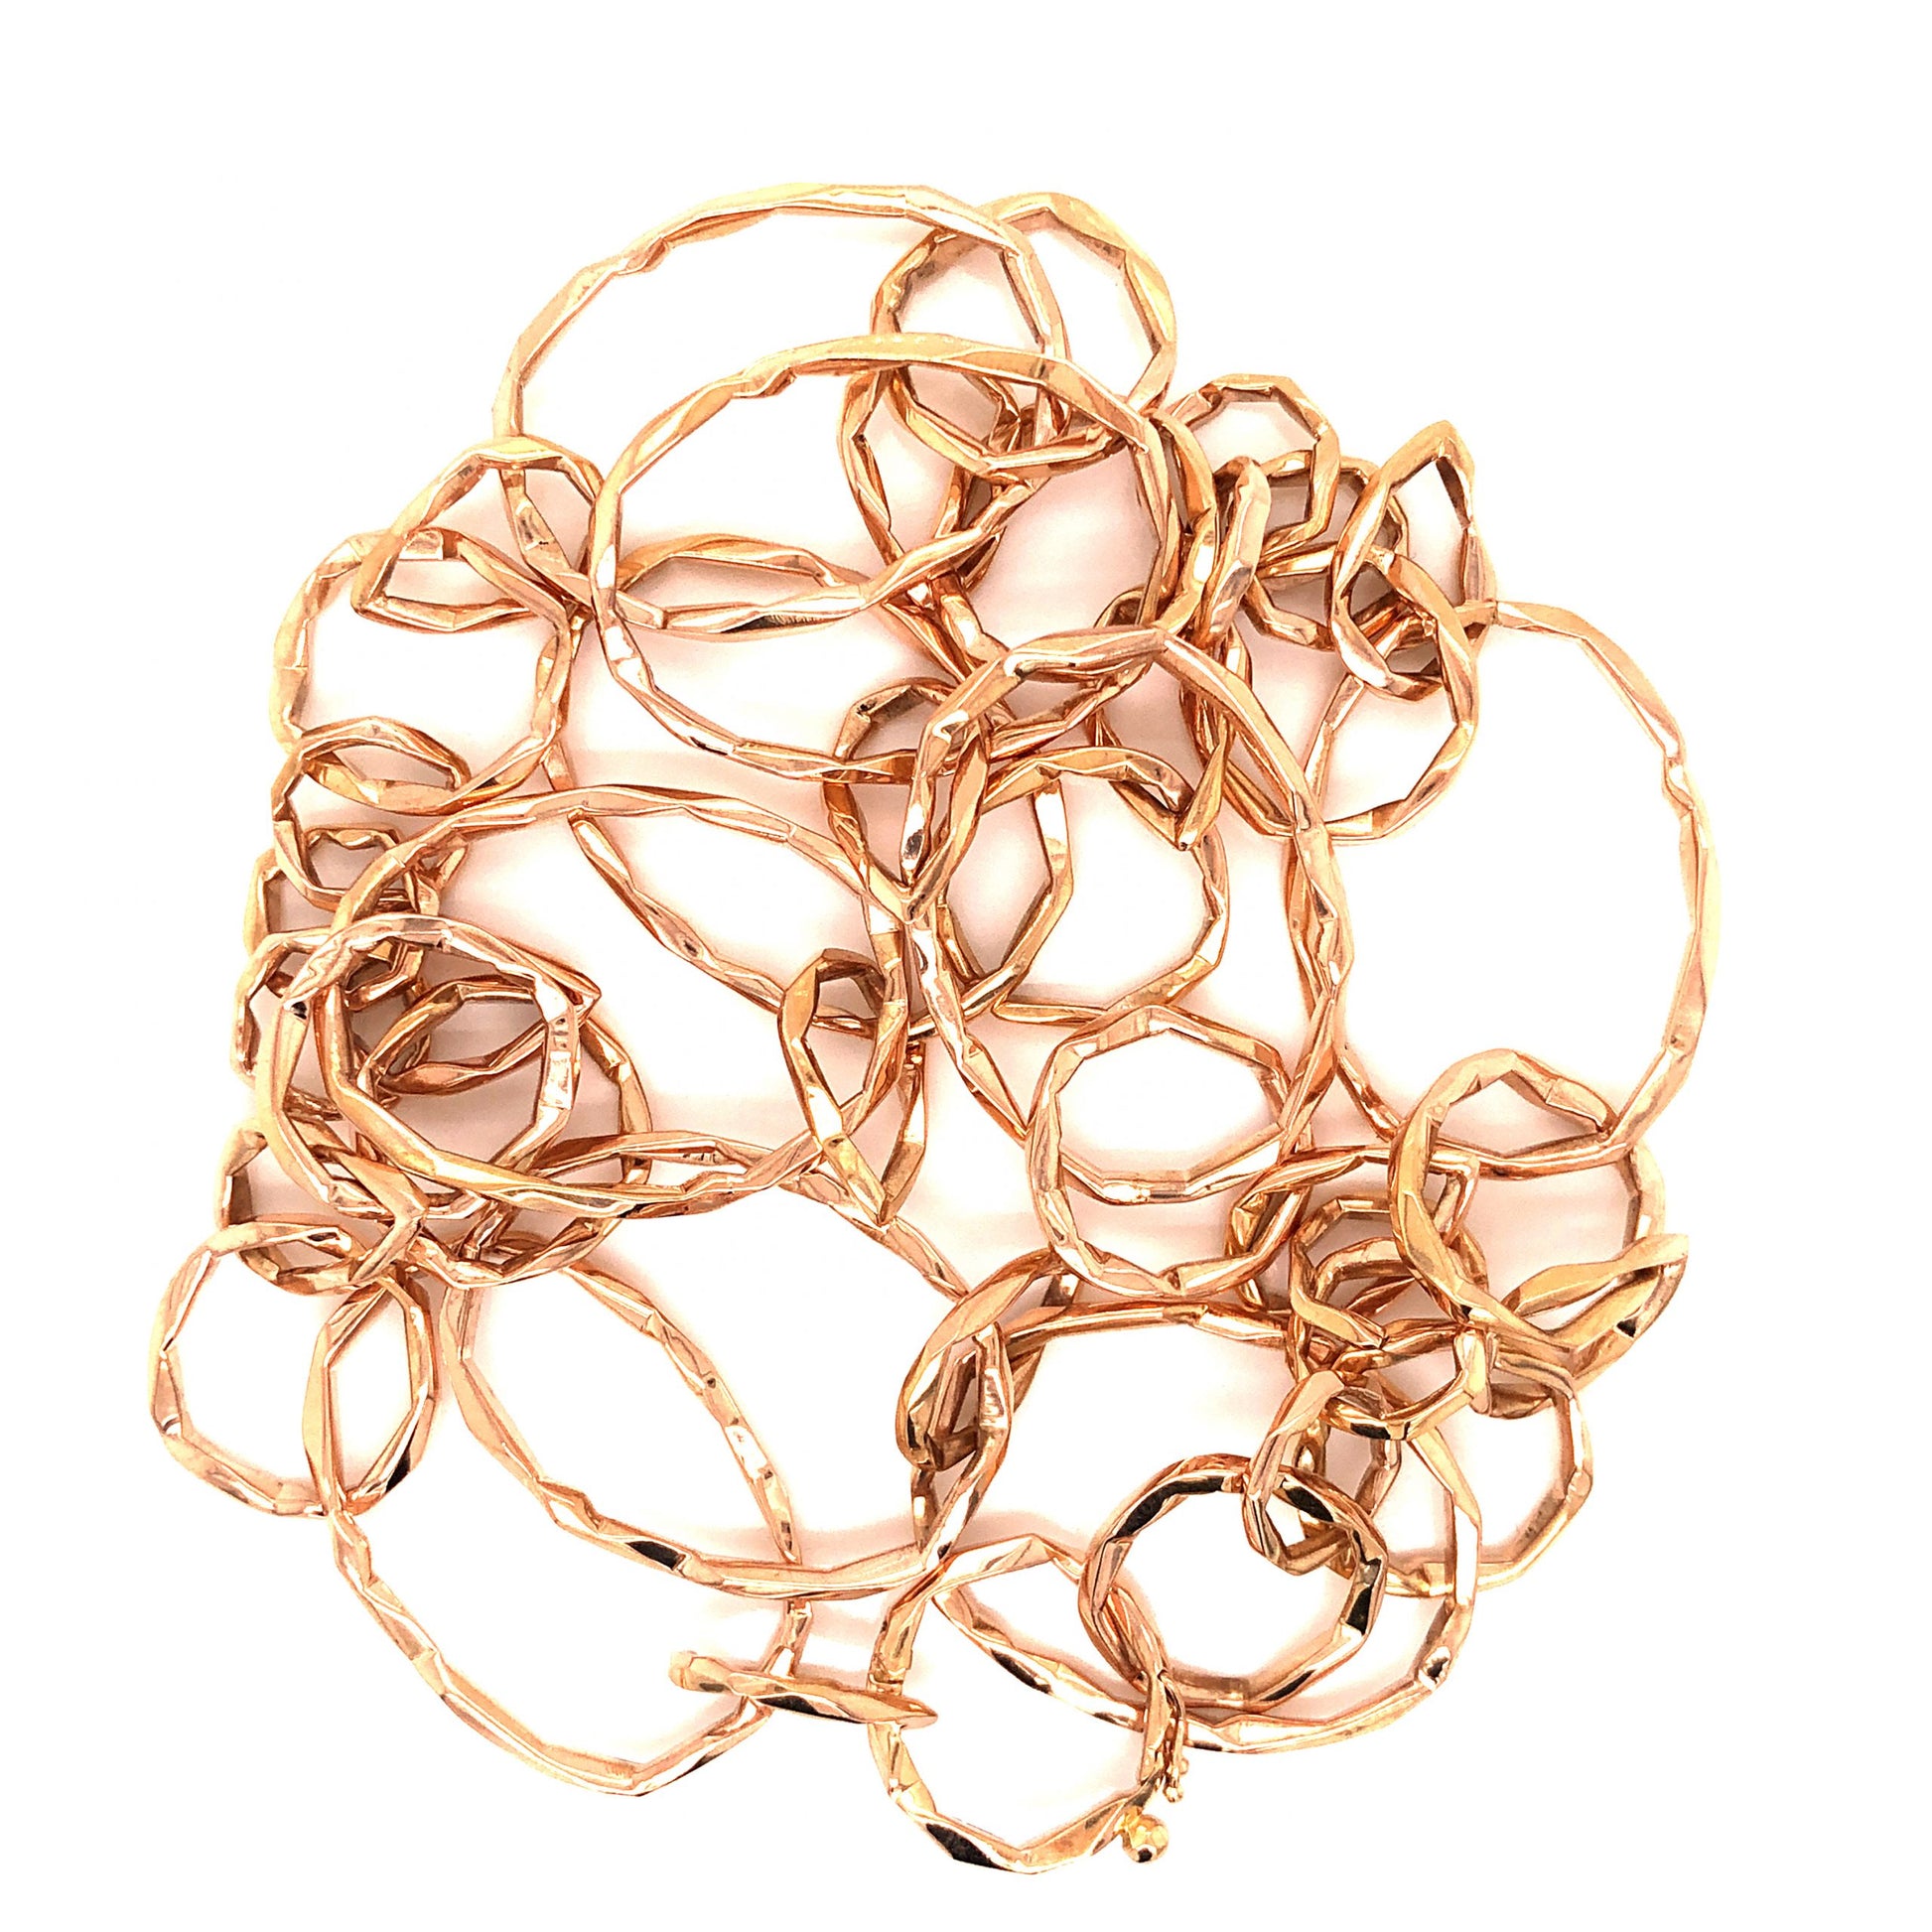 Mimi So Hammered Chain Link Necklace in 18k Rose GoldComposition: 18 Karat Rose GoldTotal Gram Weight: 88.1 gInscription: 750 1441912 mimi so 